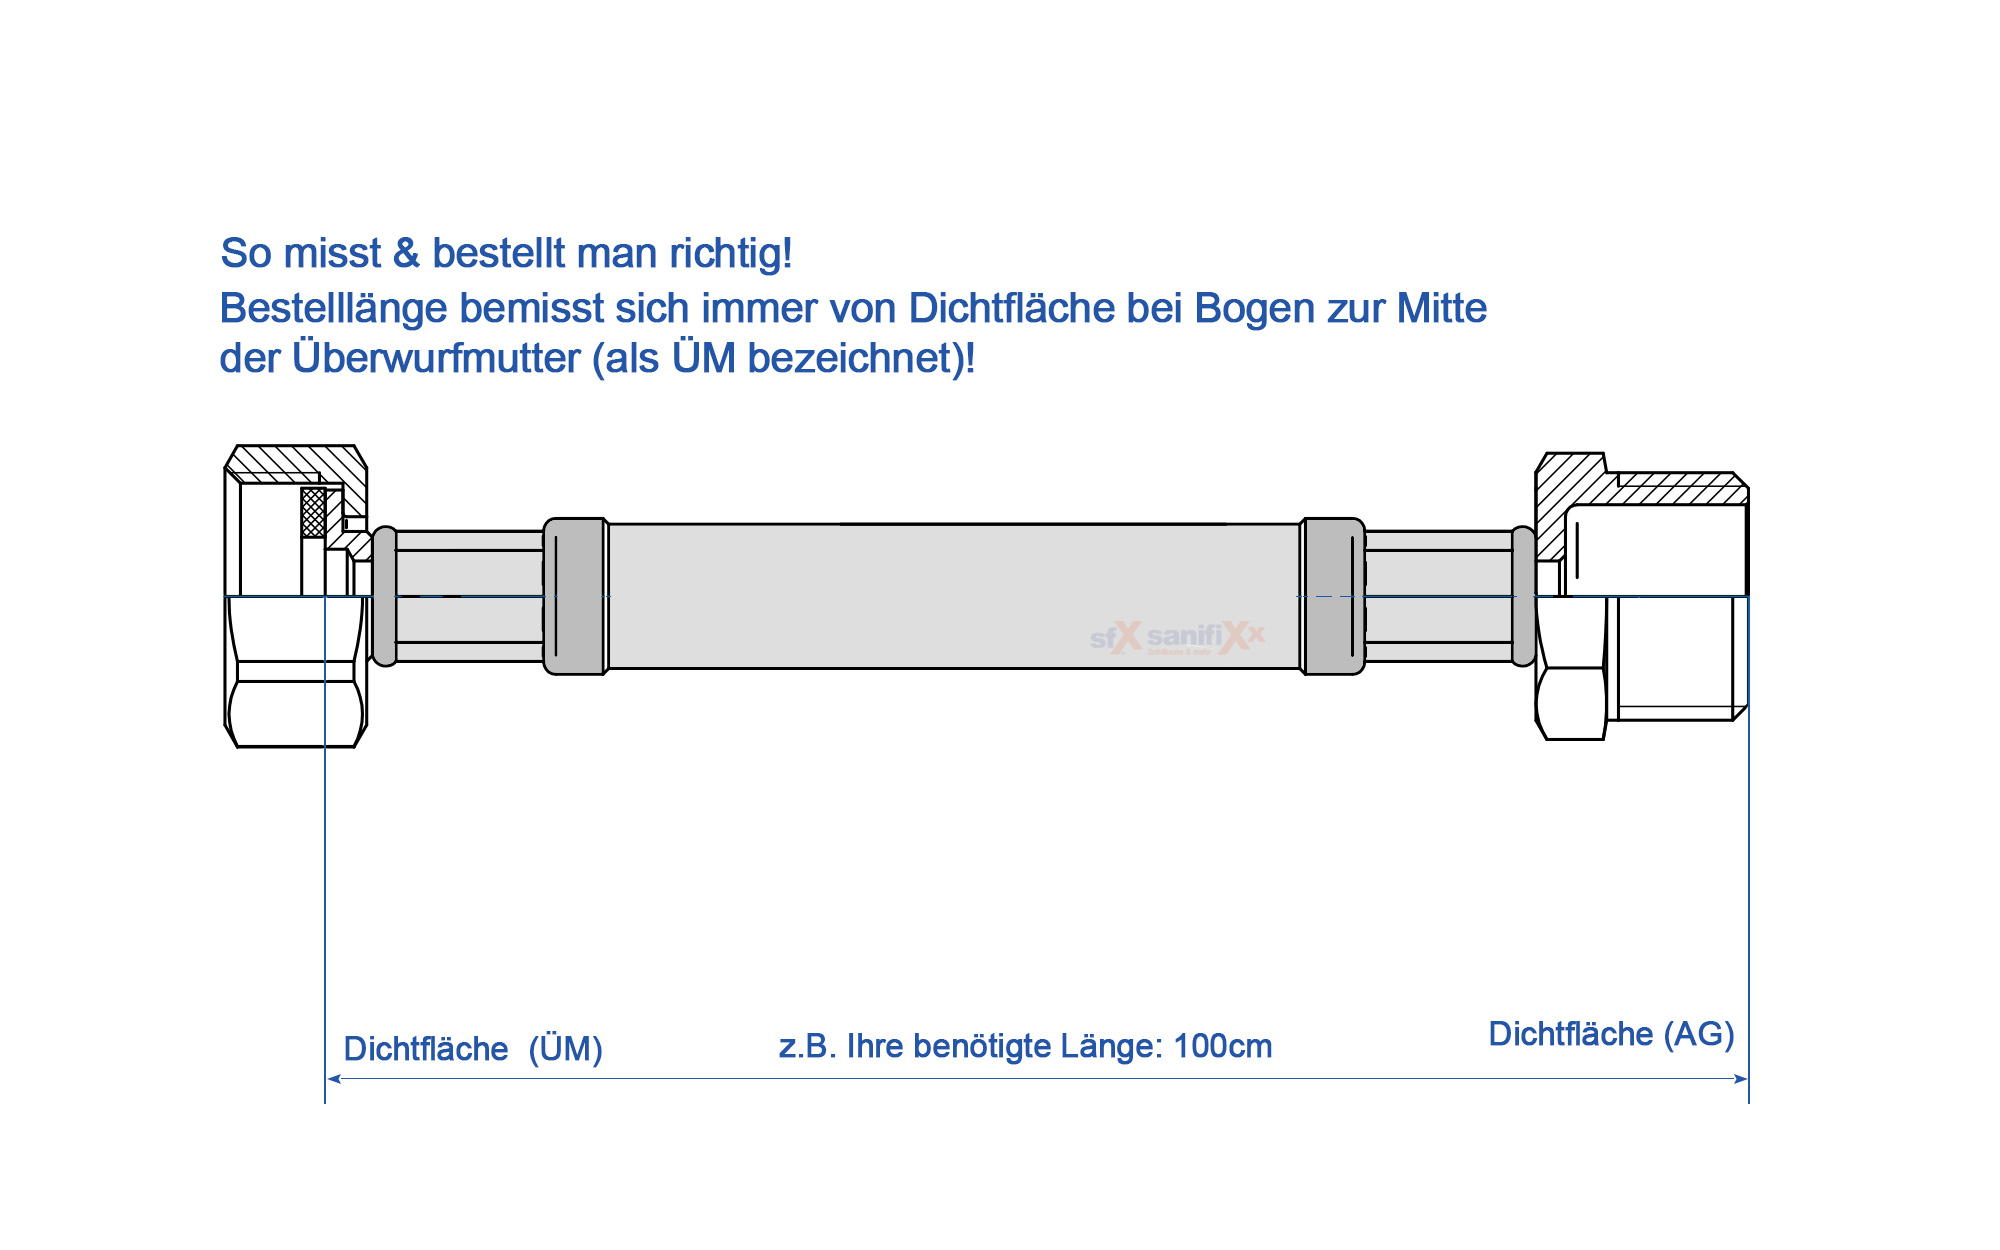 armag V2A- Flexschlauch 1/2 x 1/2 Zoll IG mit Überzug X46.H084.FF